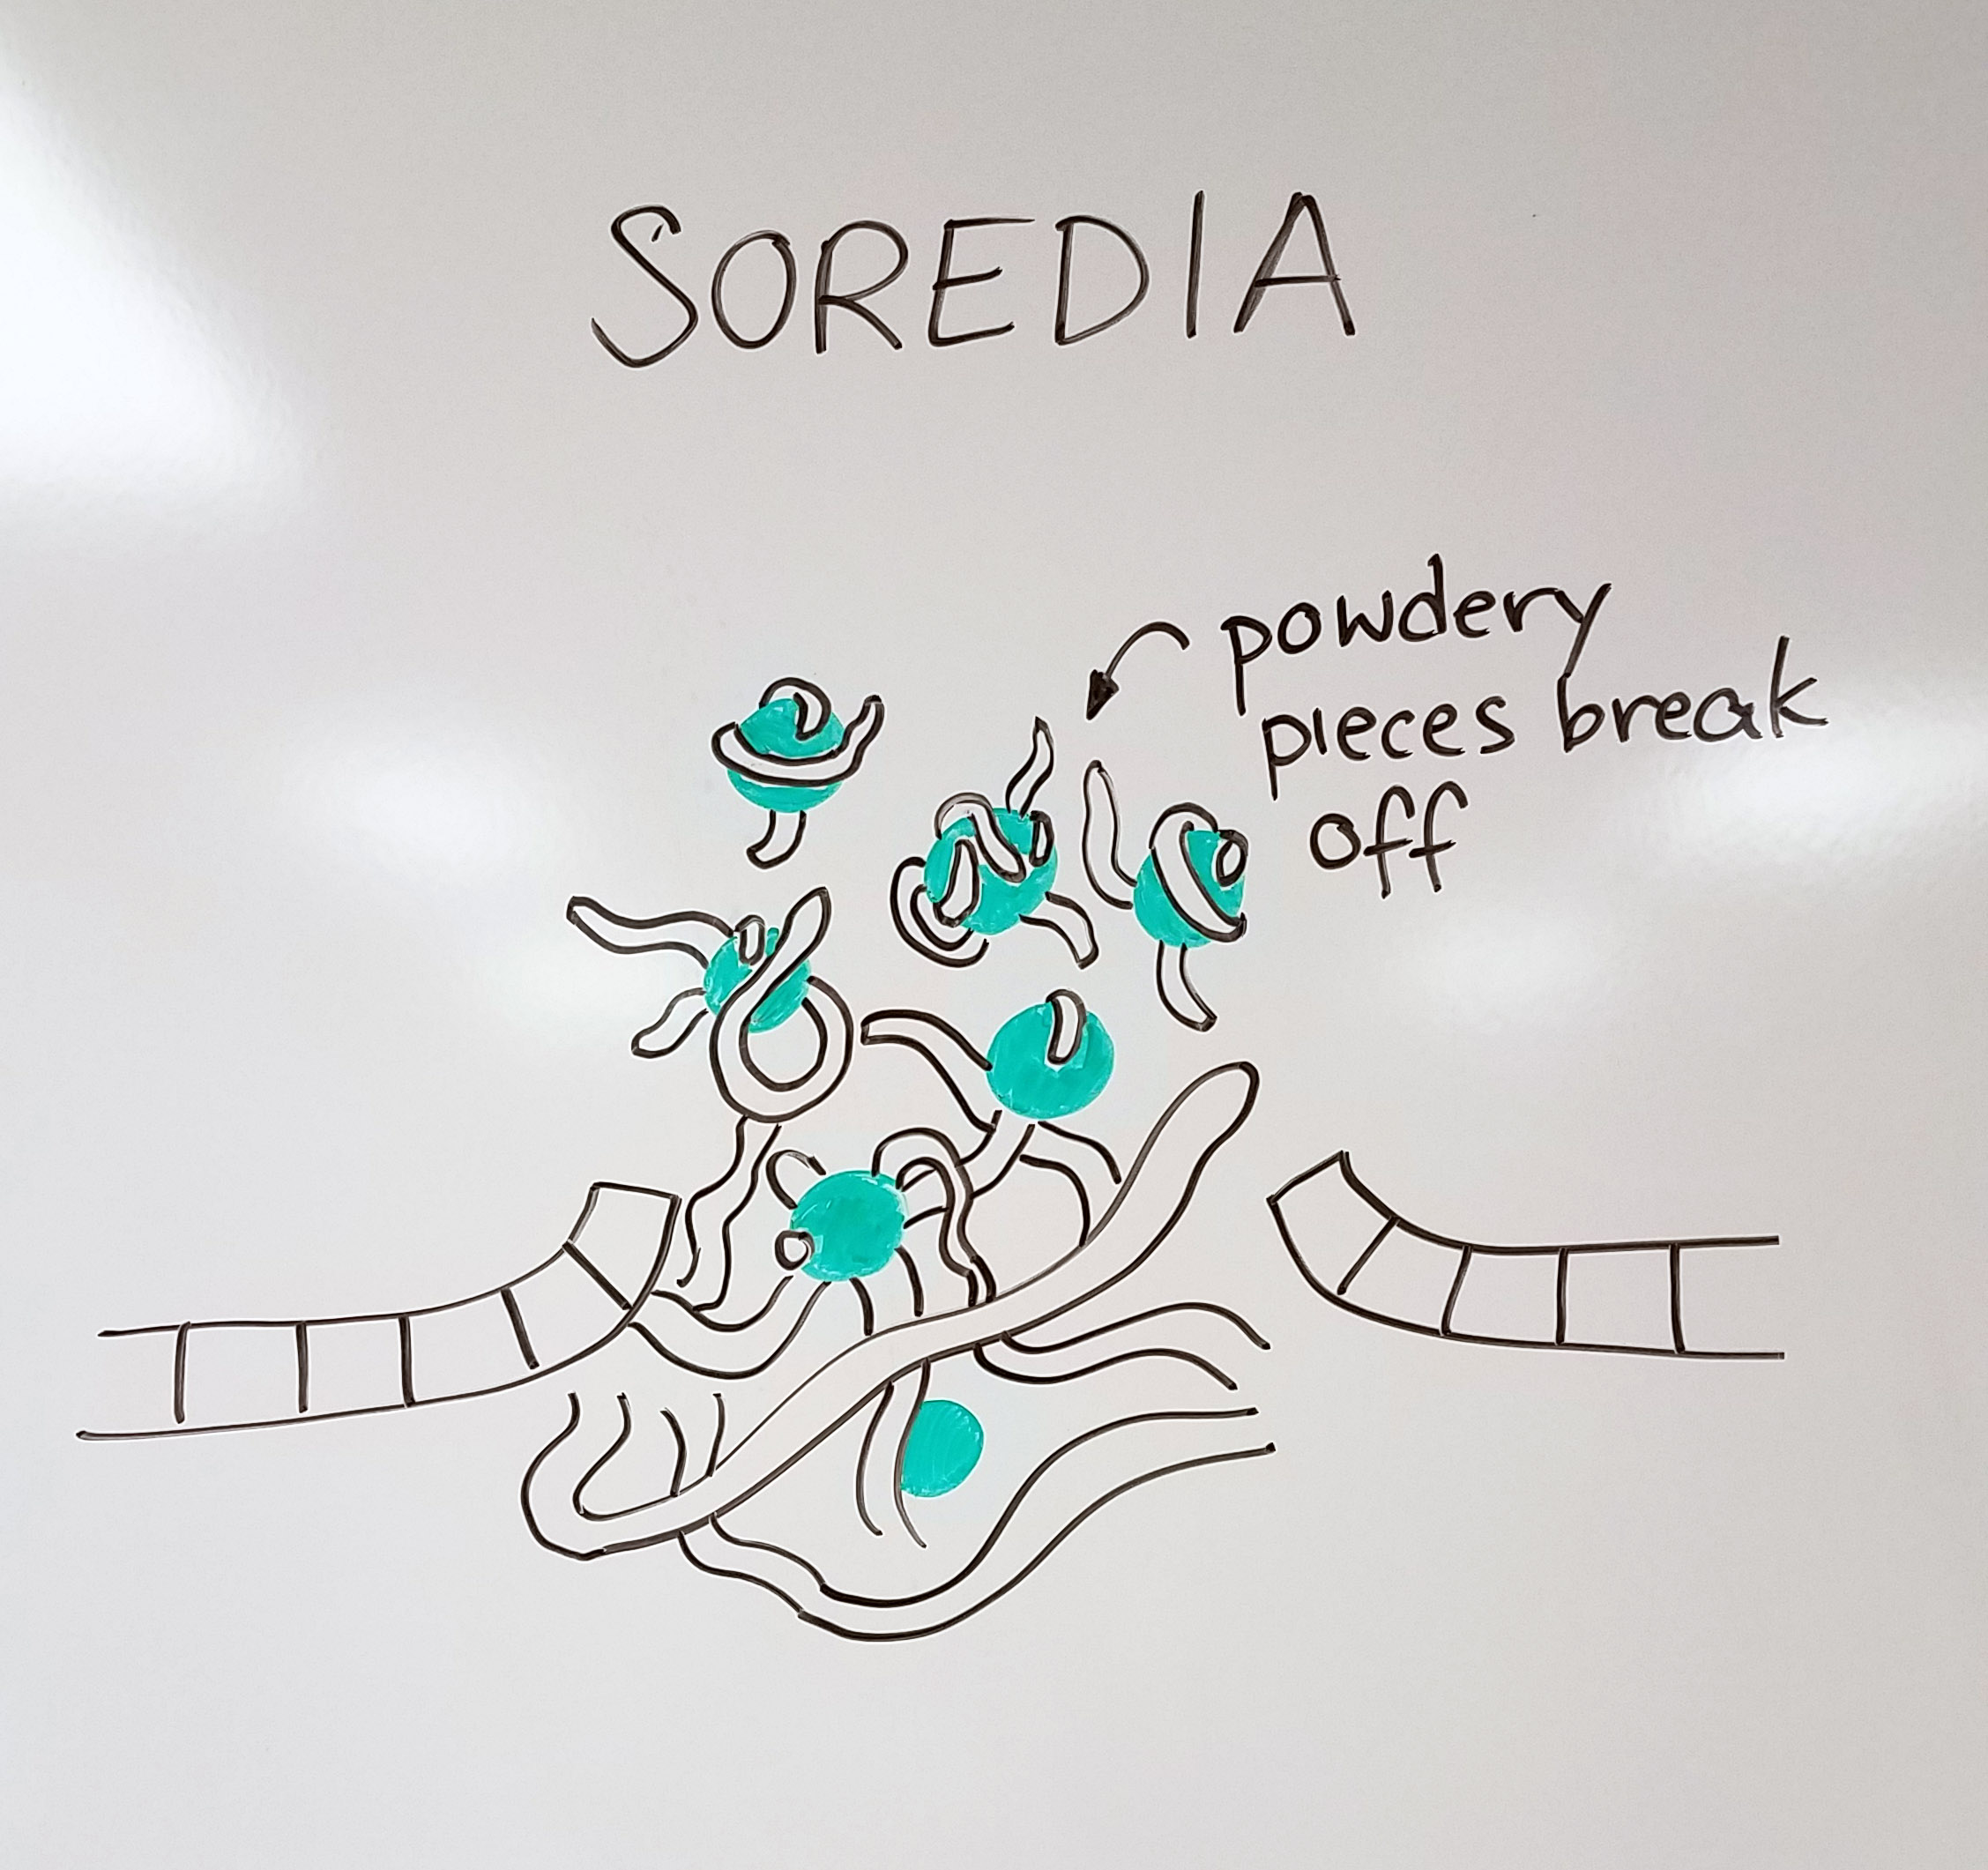  Close up of lichen reproductive structures II: soredia 